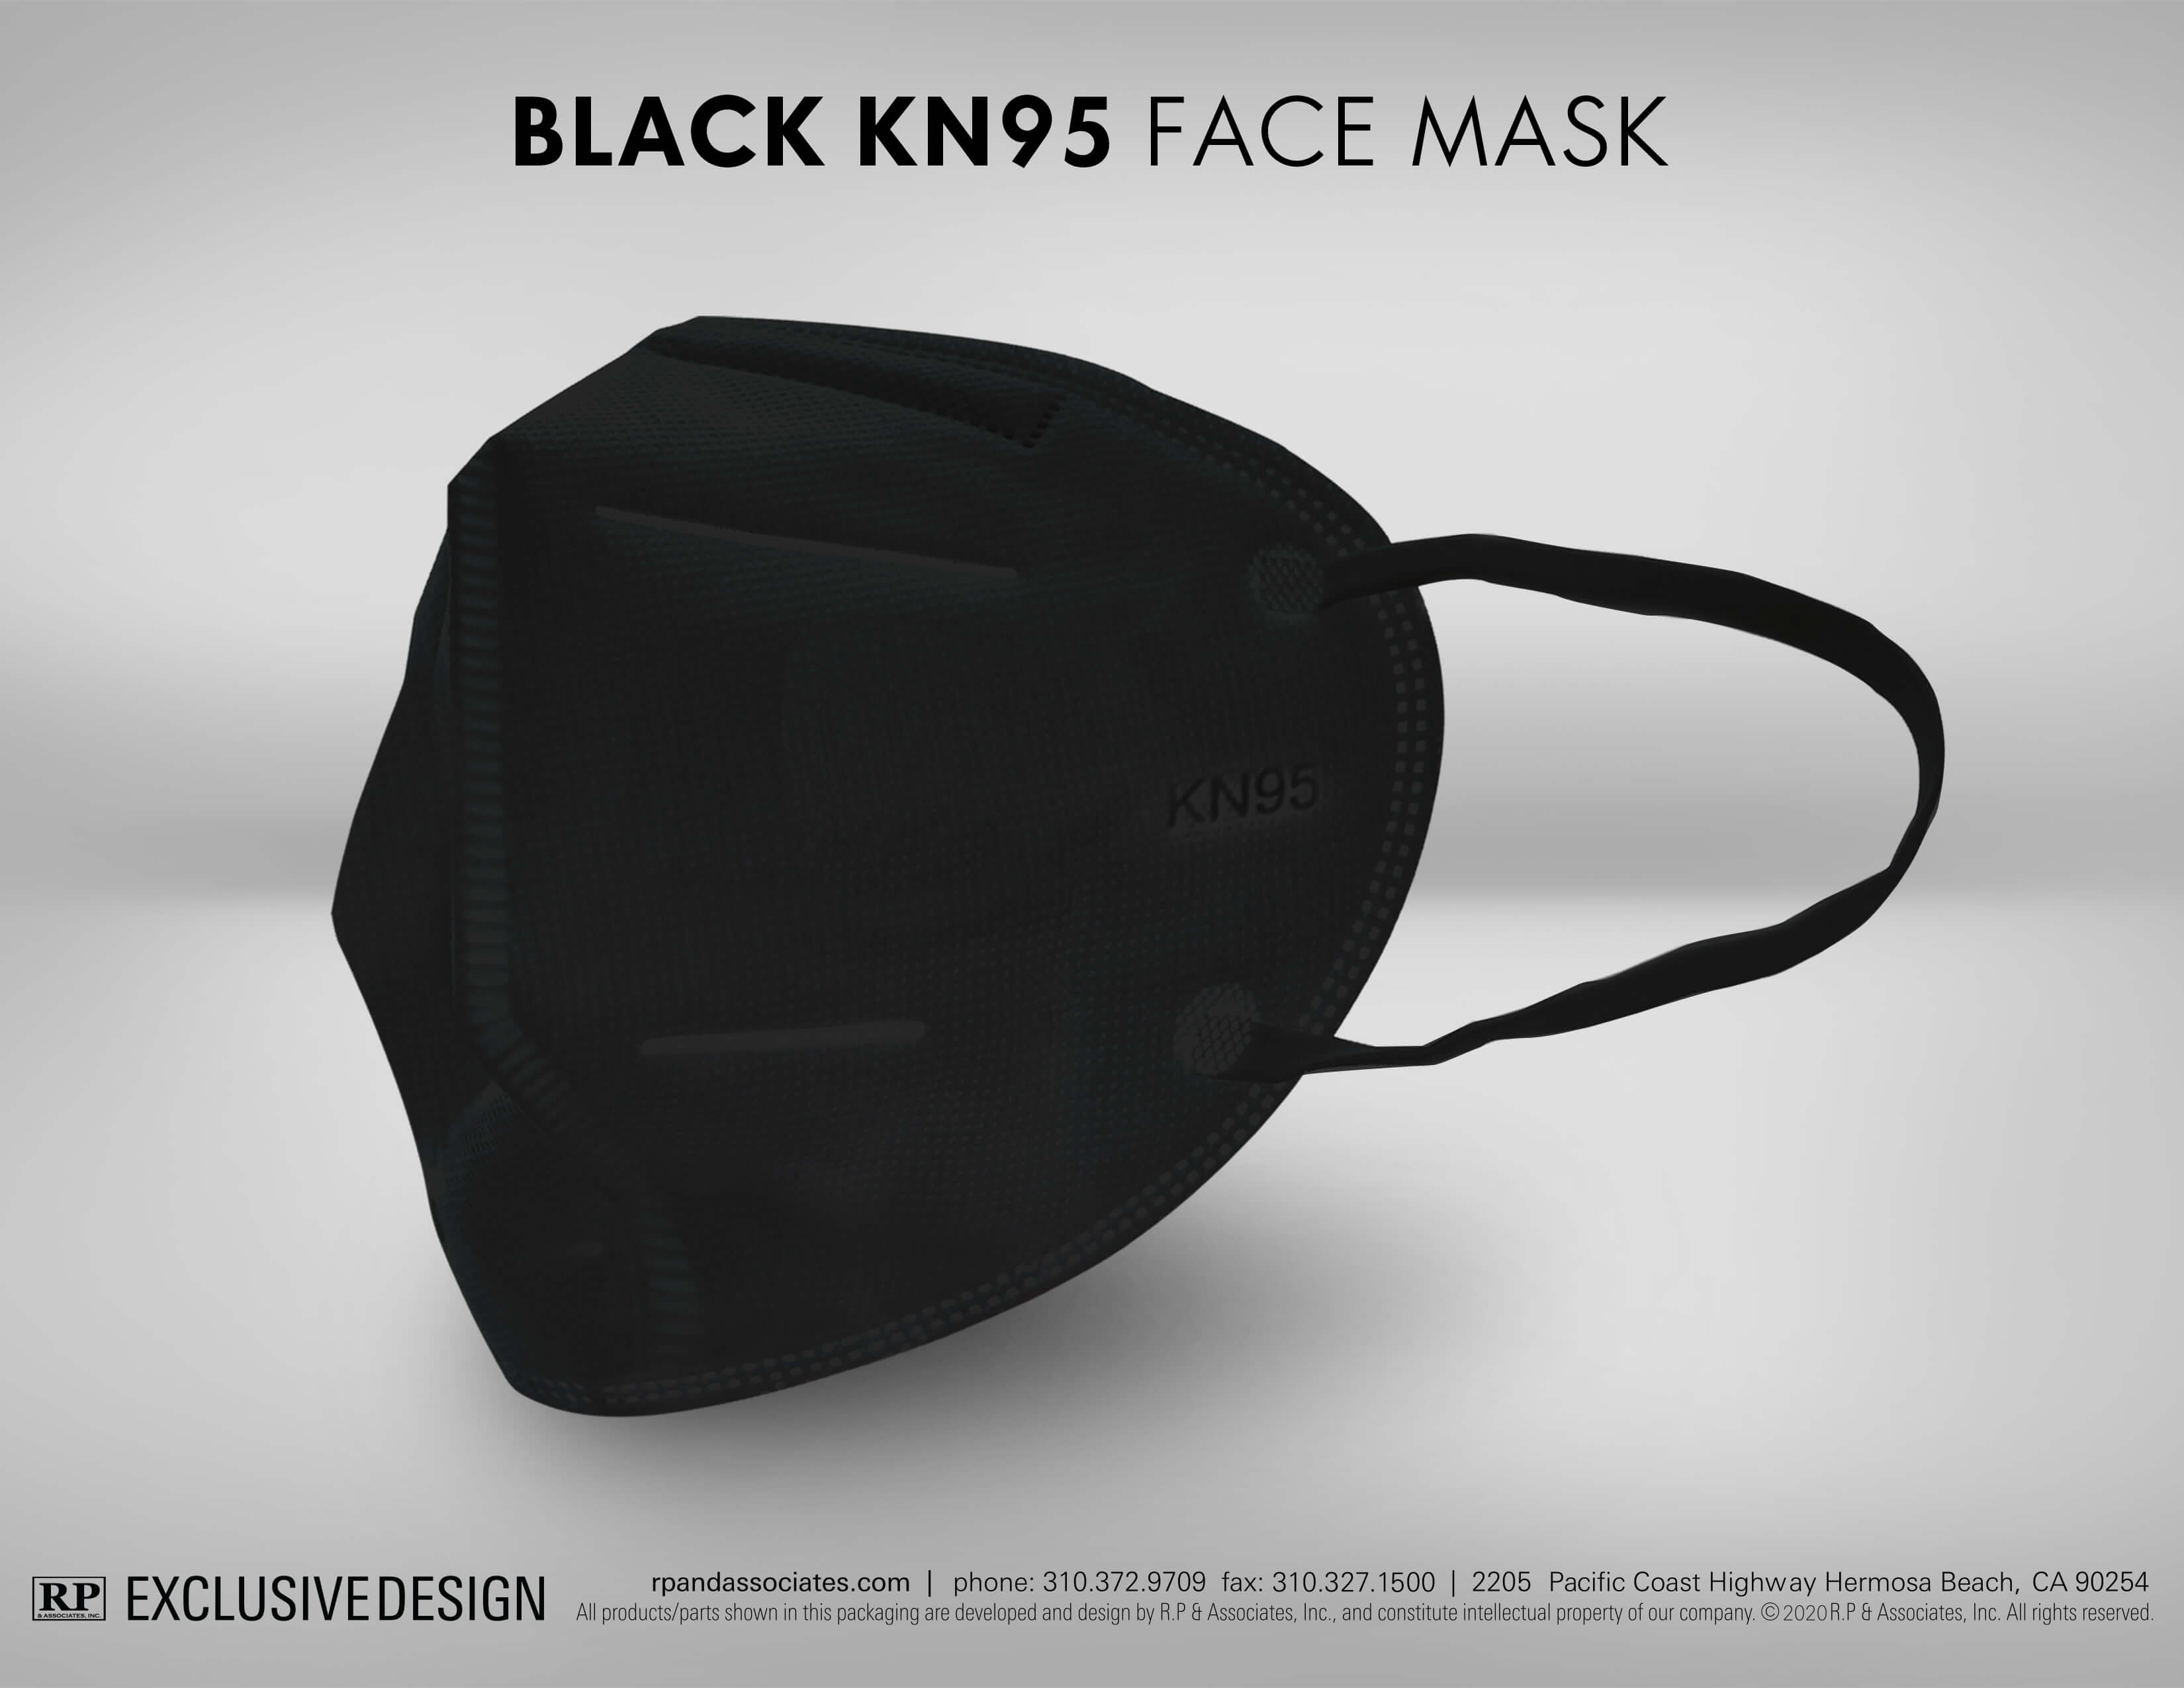 kn95 masks for civil use